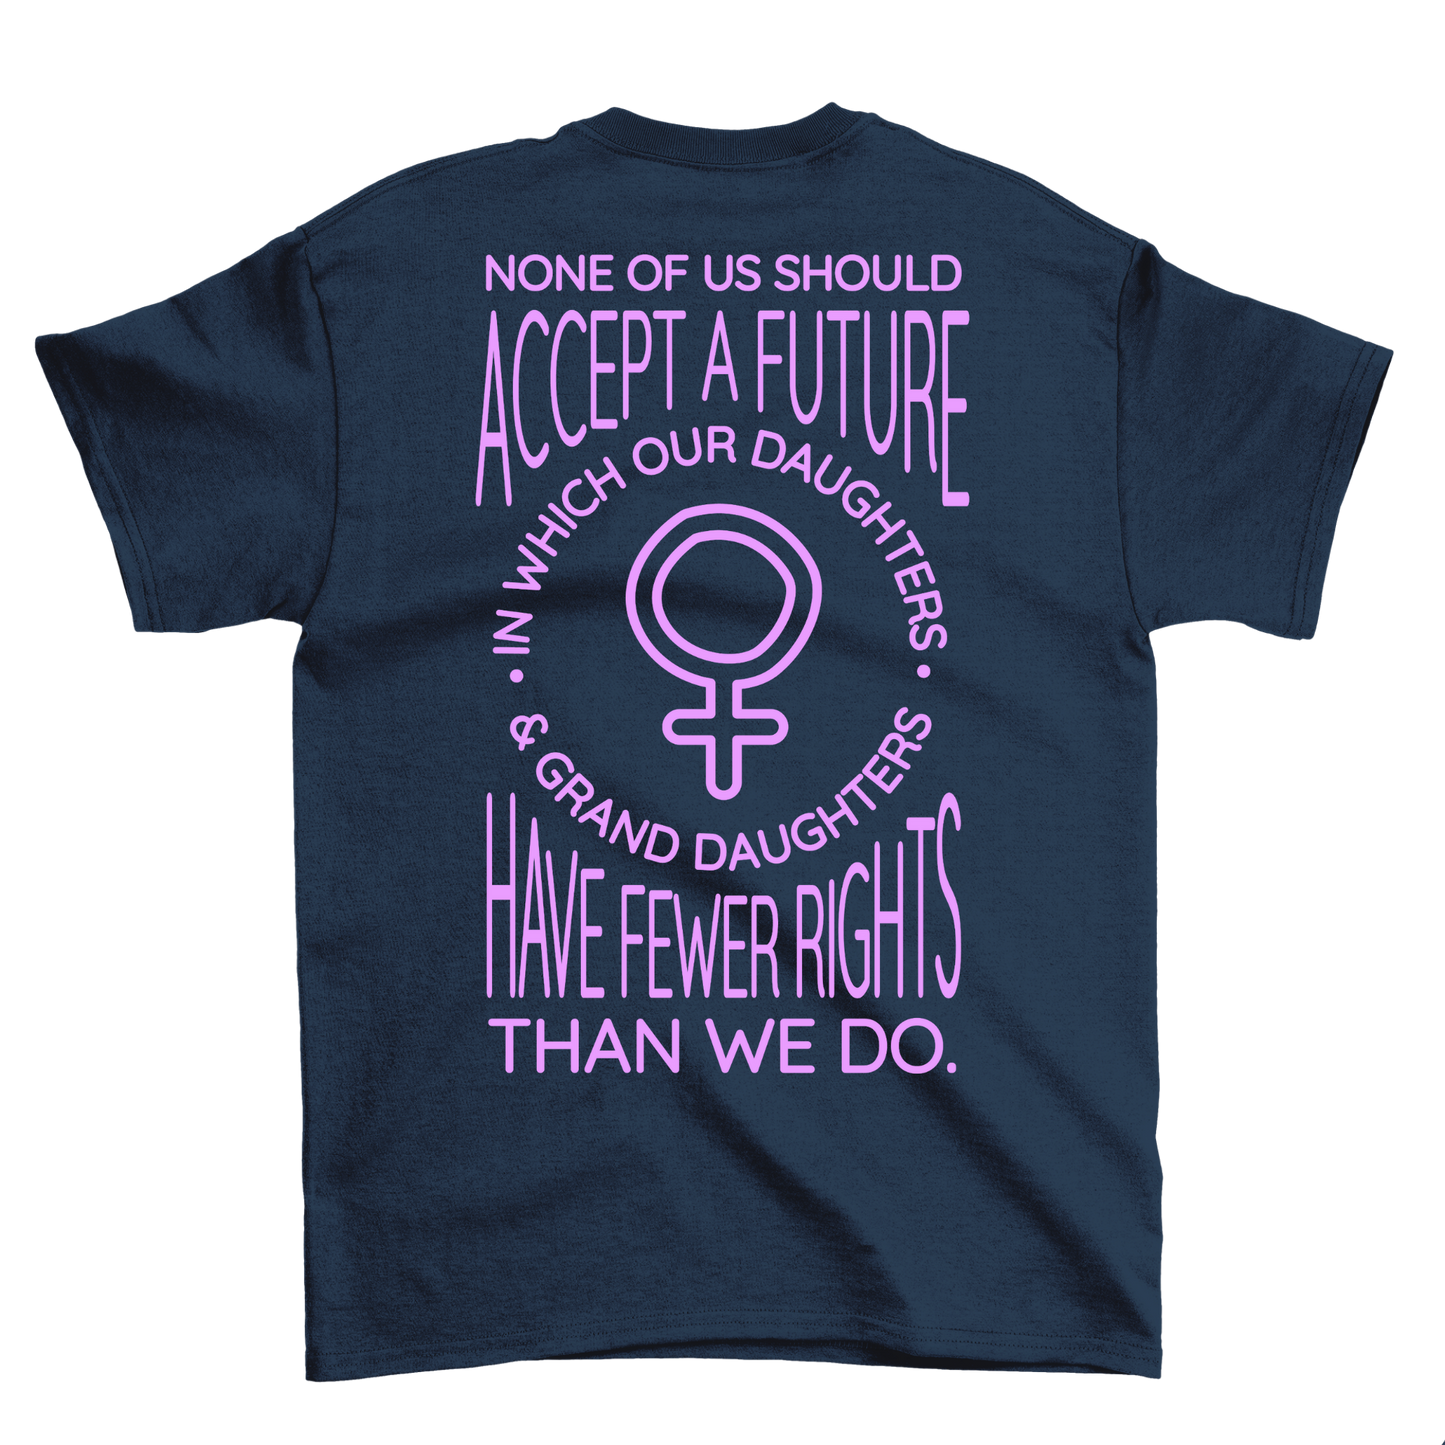 Women's Rights T-Shirt